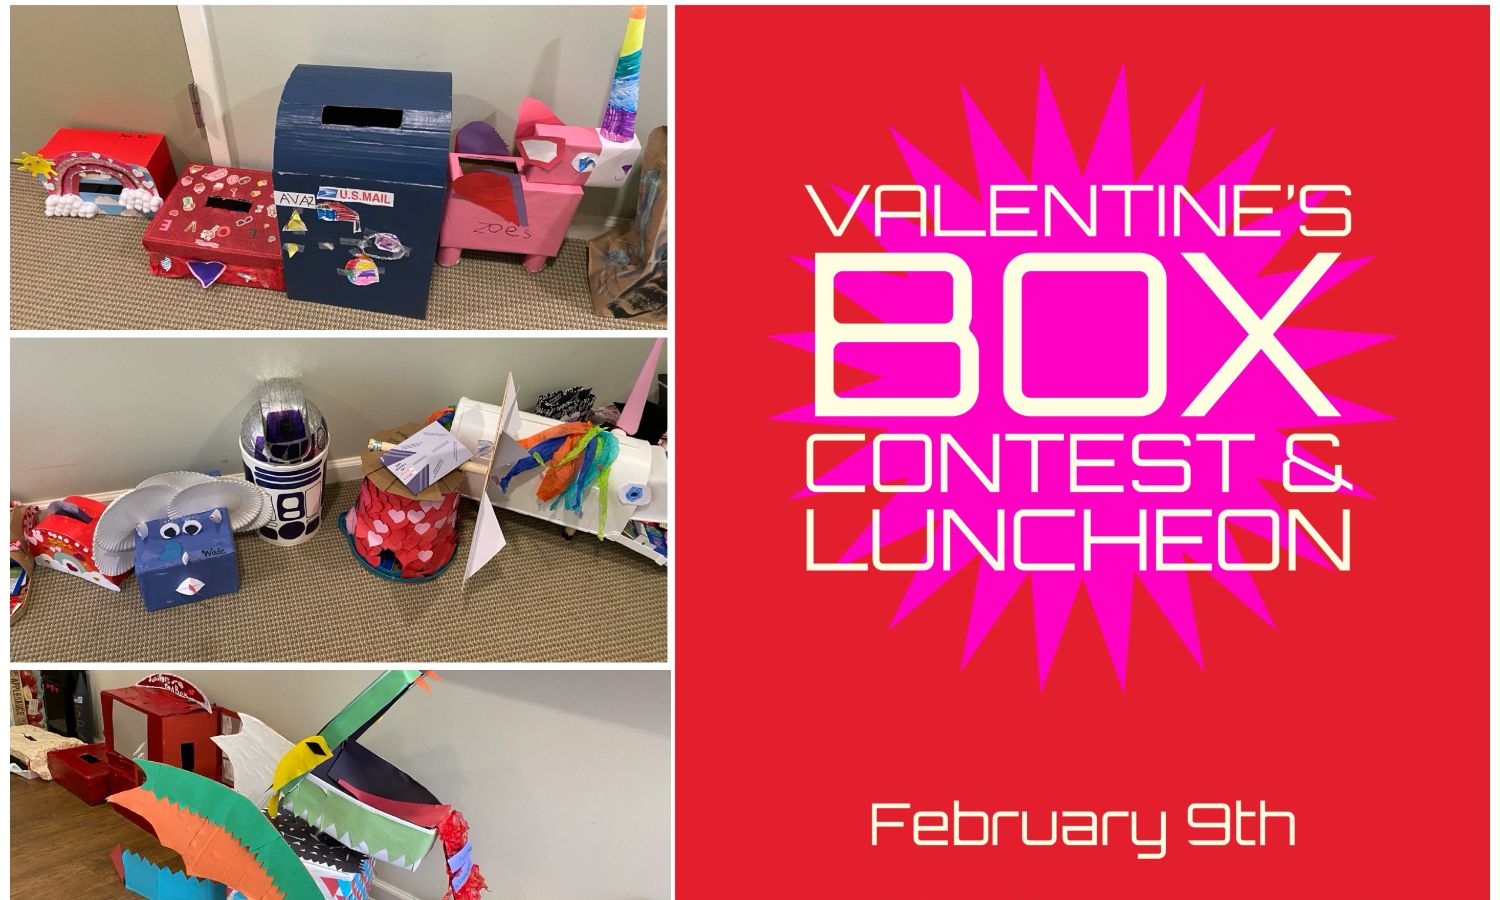 Valentine's Box Contest & Luncheon